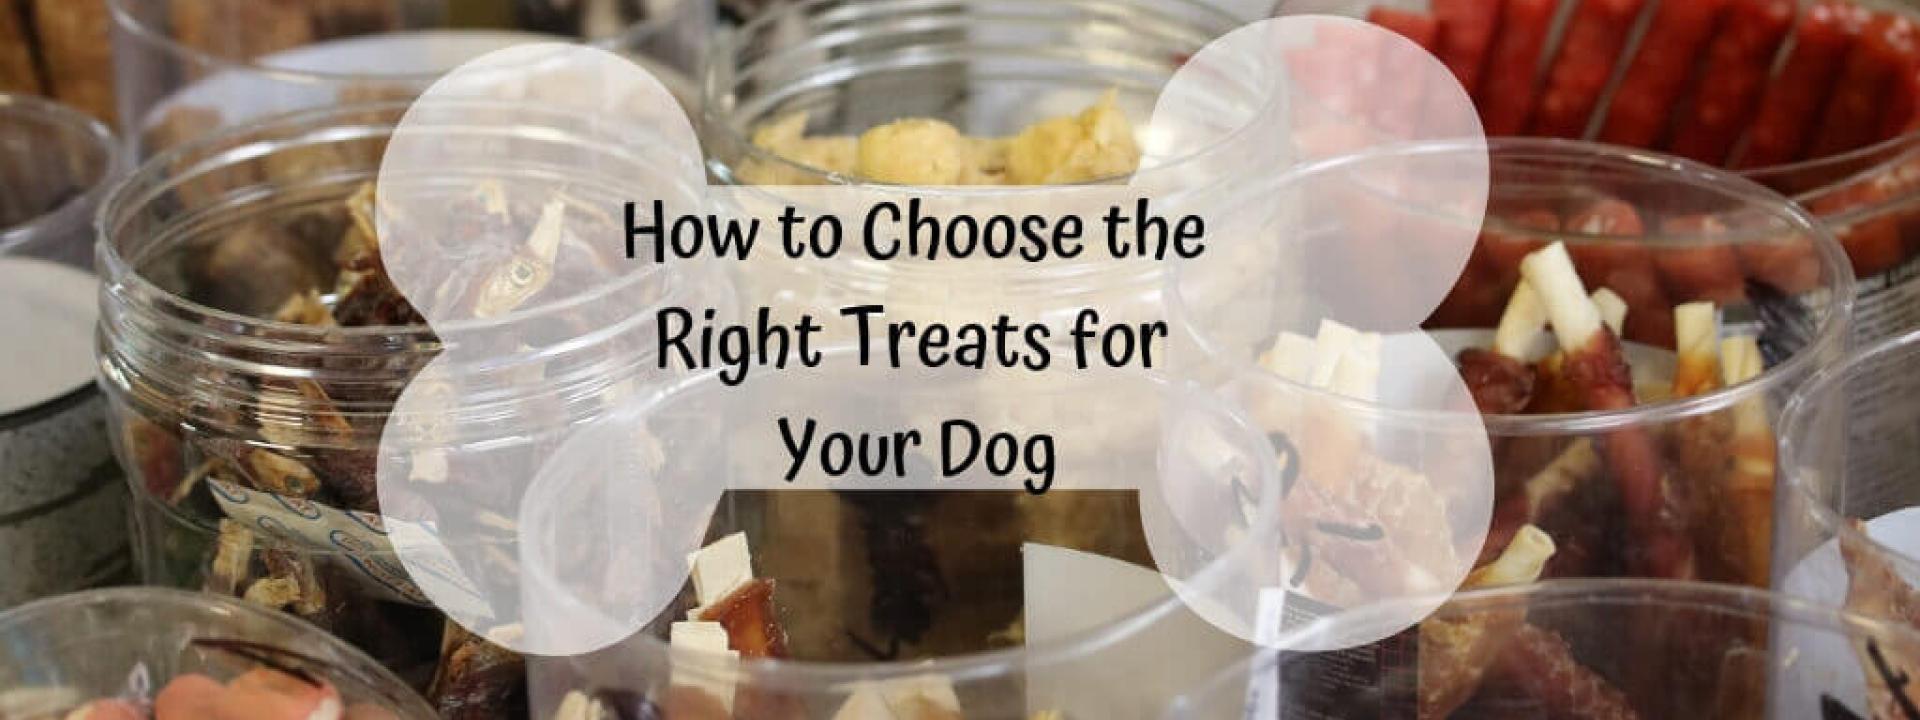 how-to-choose-dog-treats-blog-header.jpg